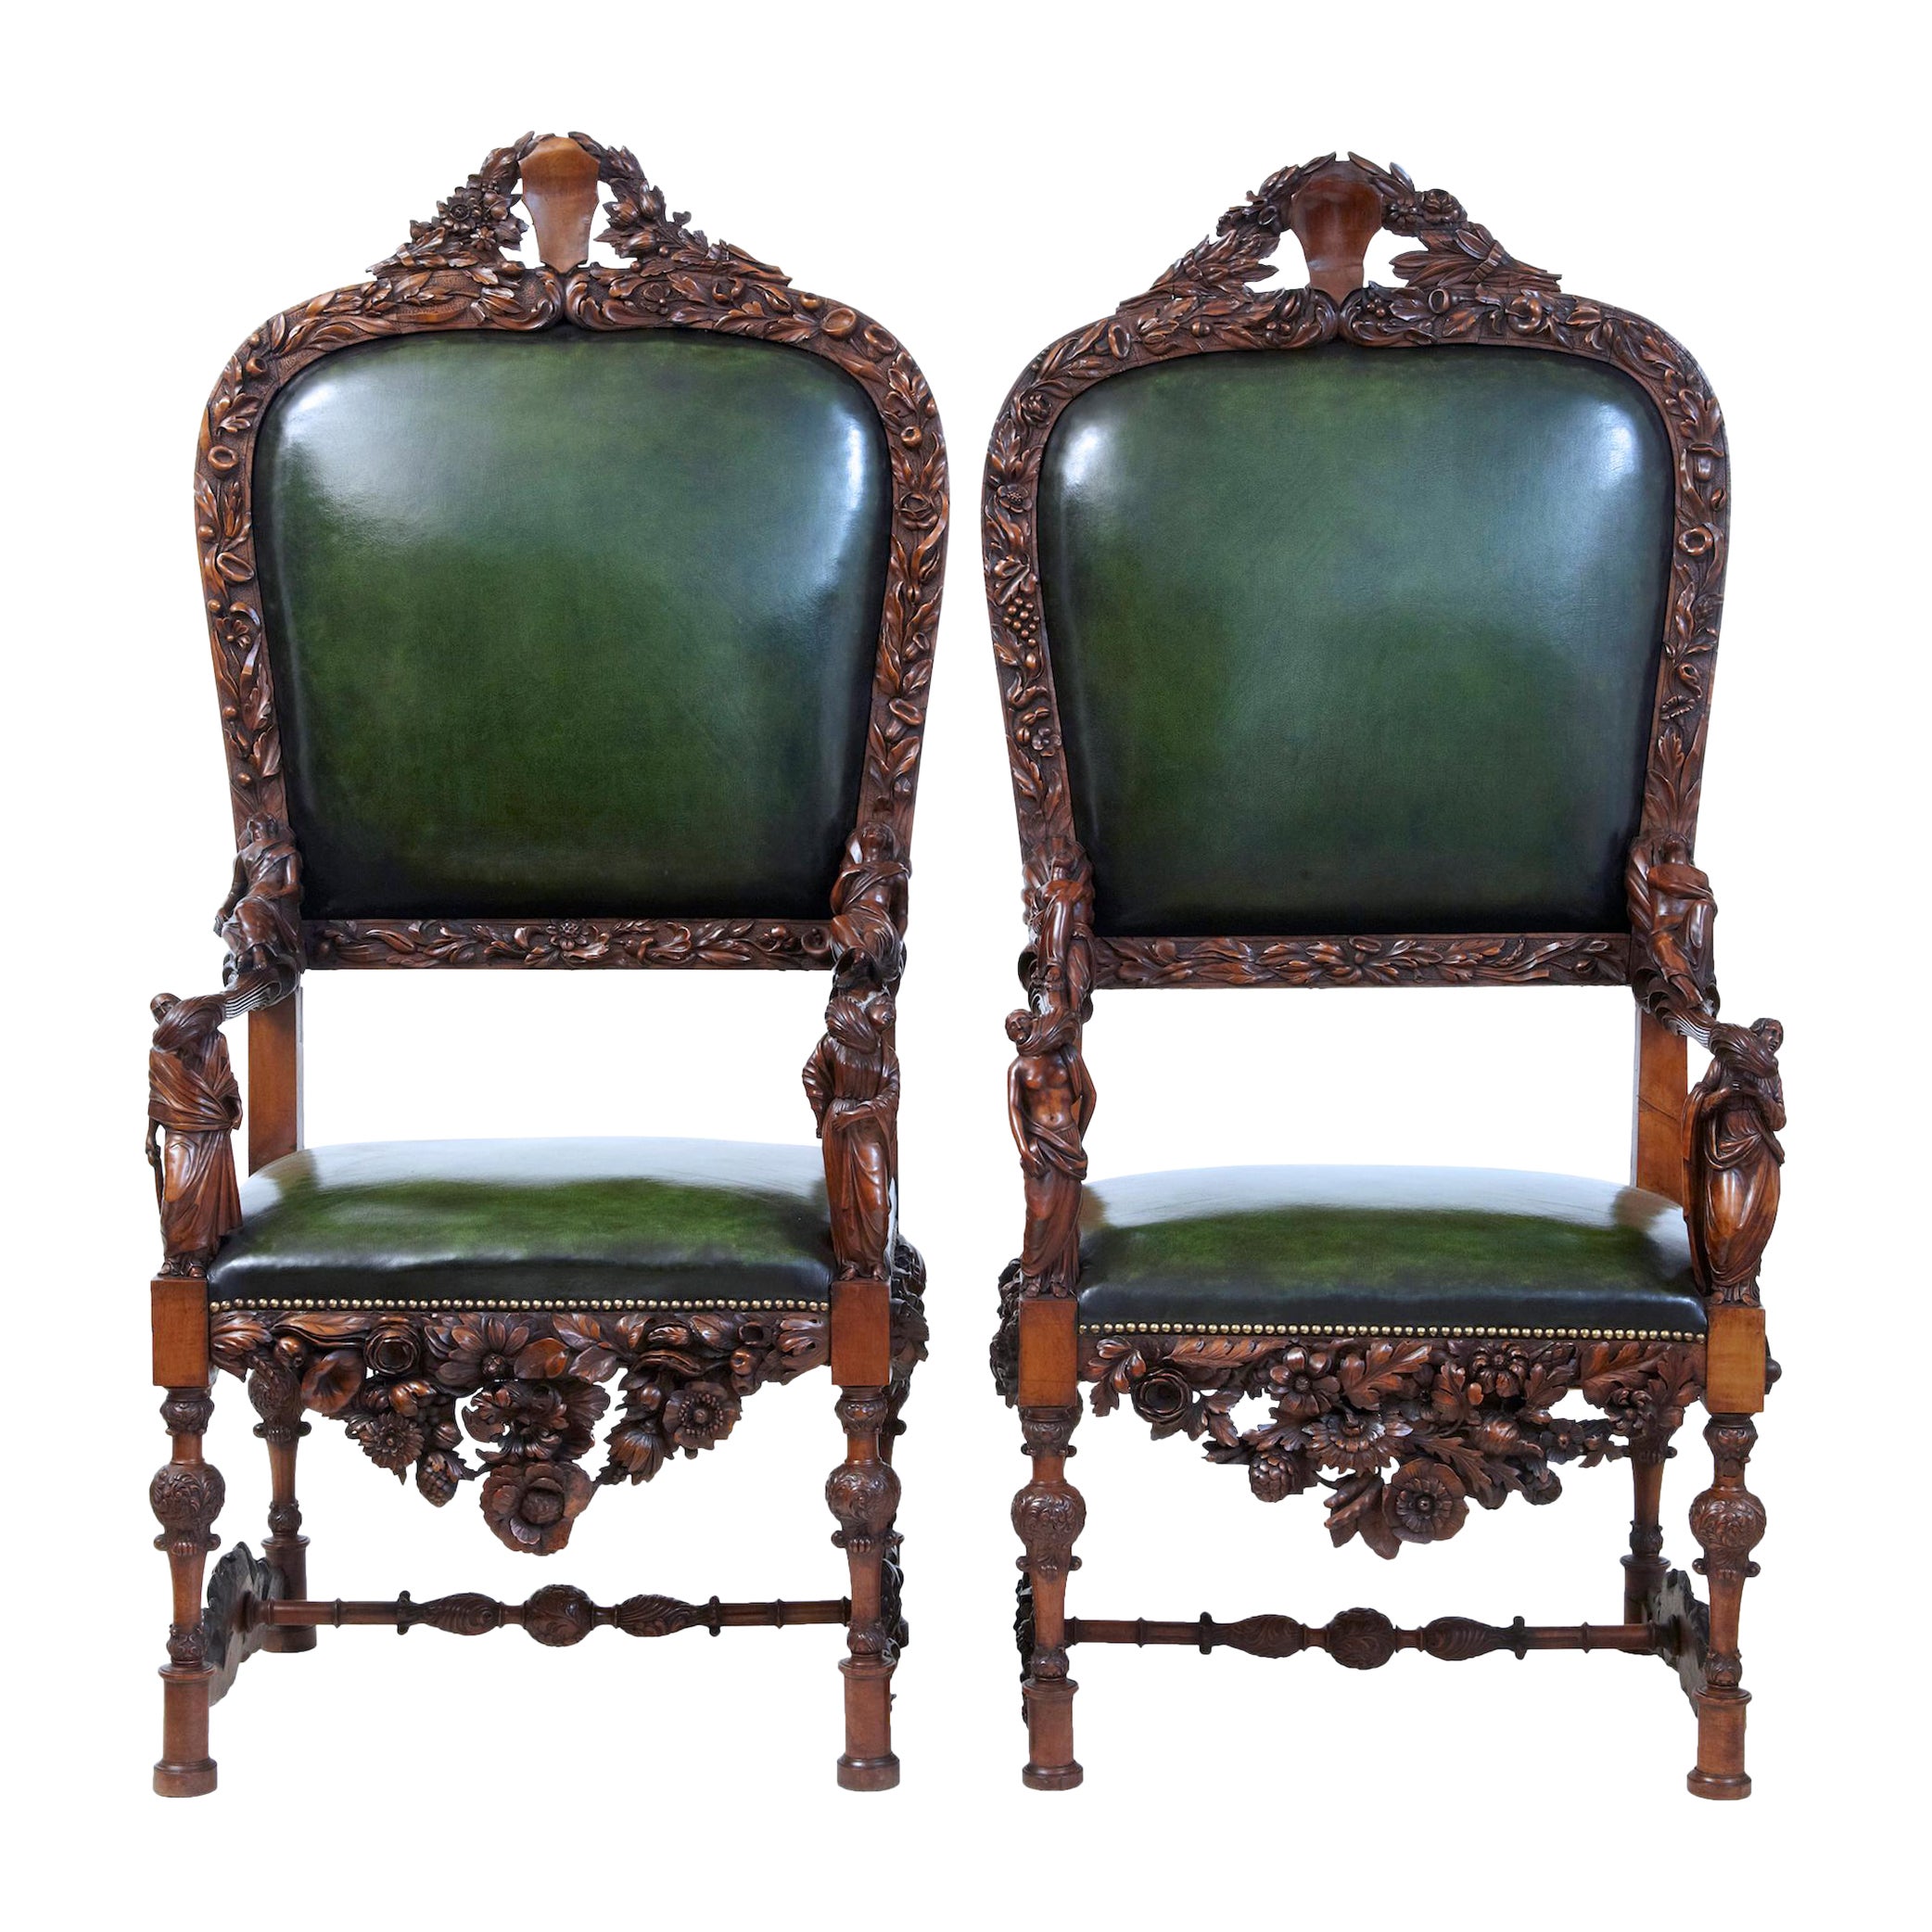 Impressive pair of 19th century carved walnut Florentine renaissance armchairs